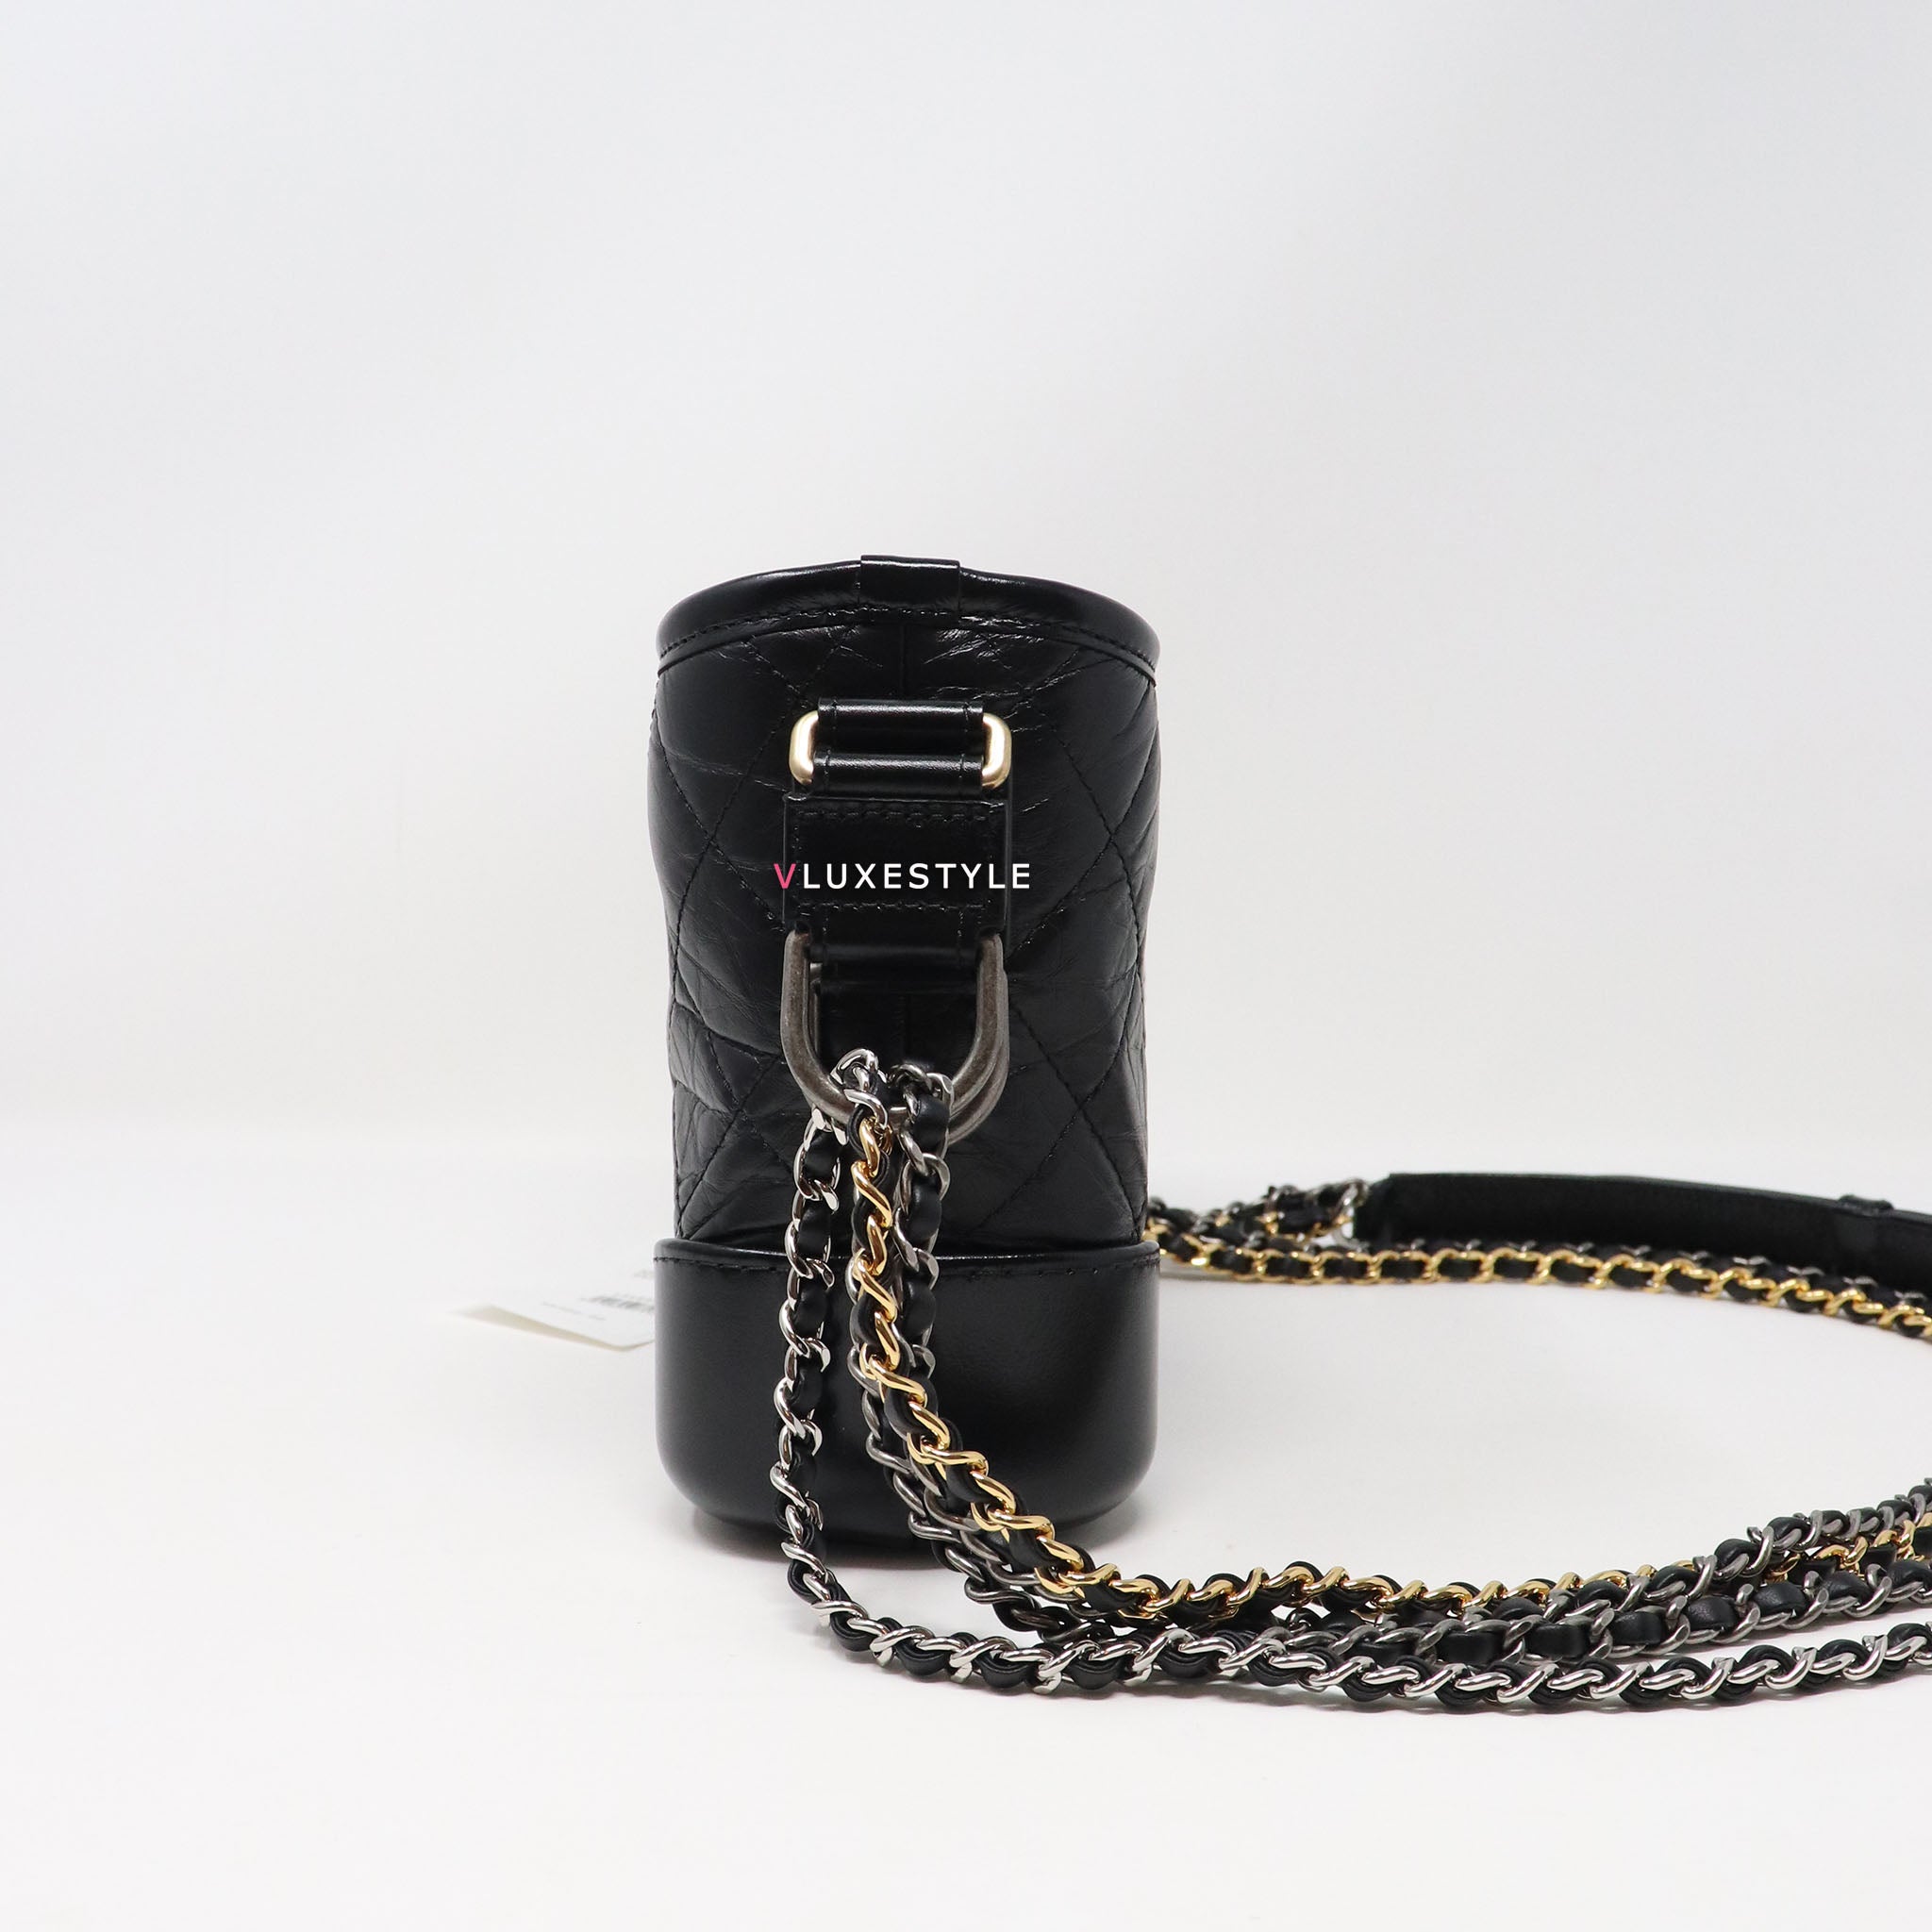 Chanel Calfskin Chevron Small Gabrielle Hobo Black Mixed Hardware – Coco  Approved Studio